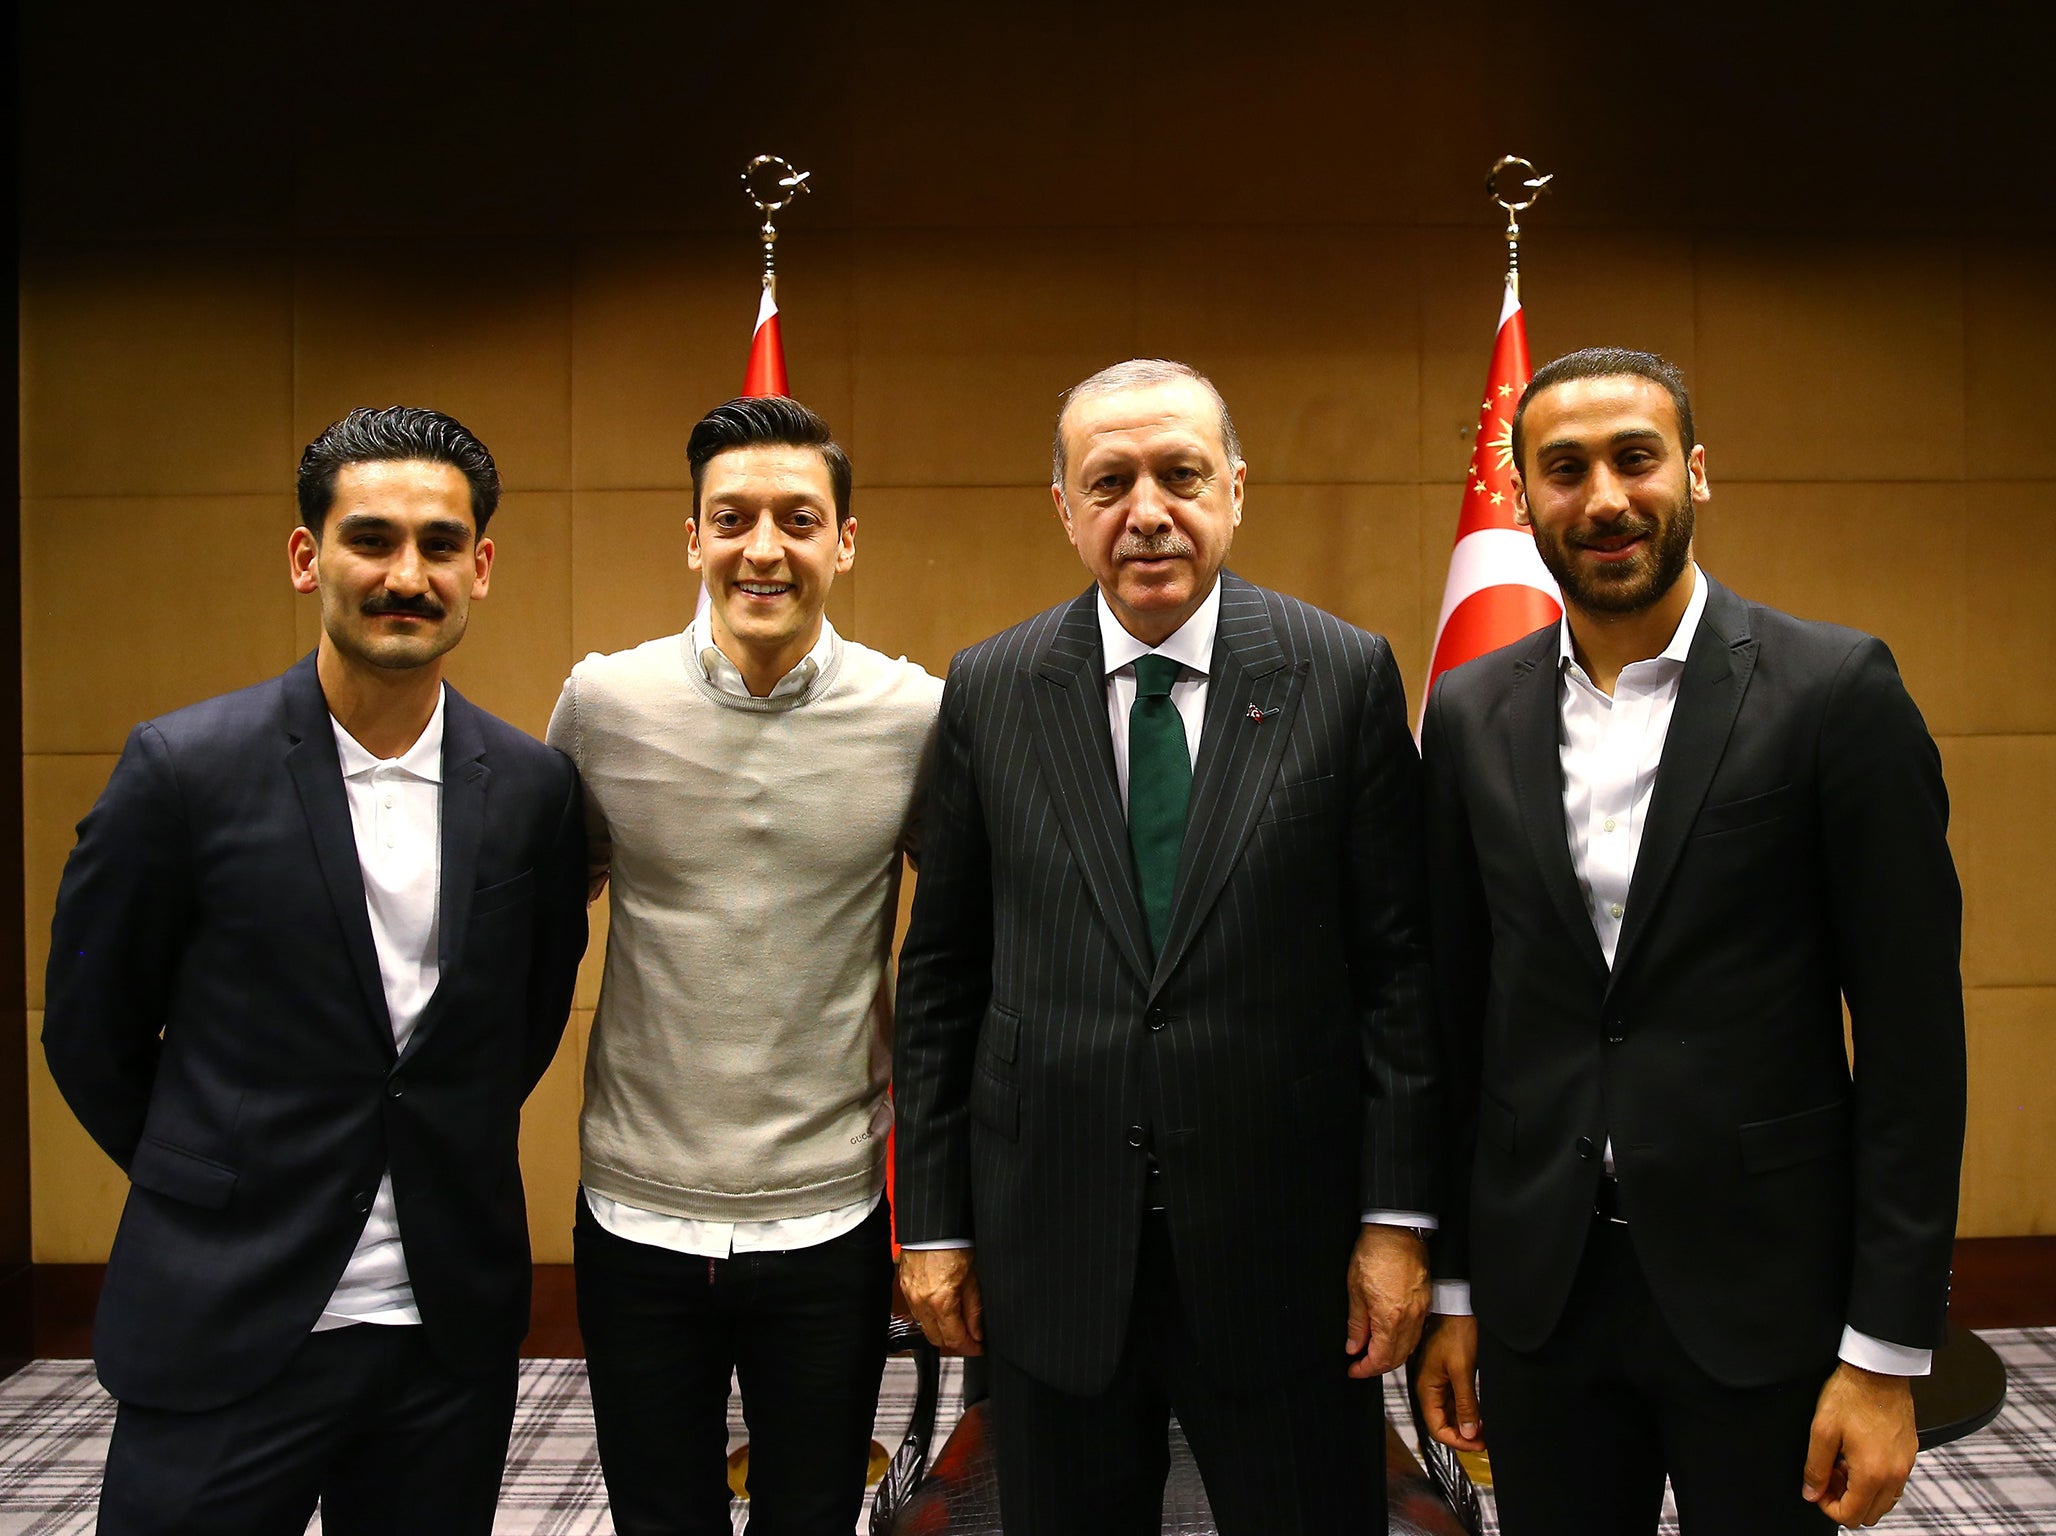 Premier League players Gündoğan (L), Özil (2L) and Tosun (R) with Erdoğan